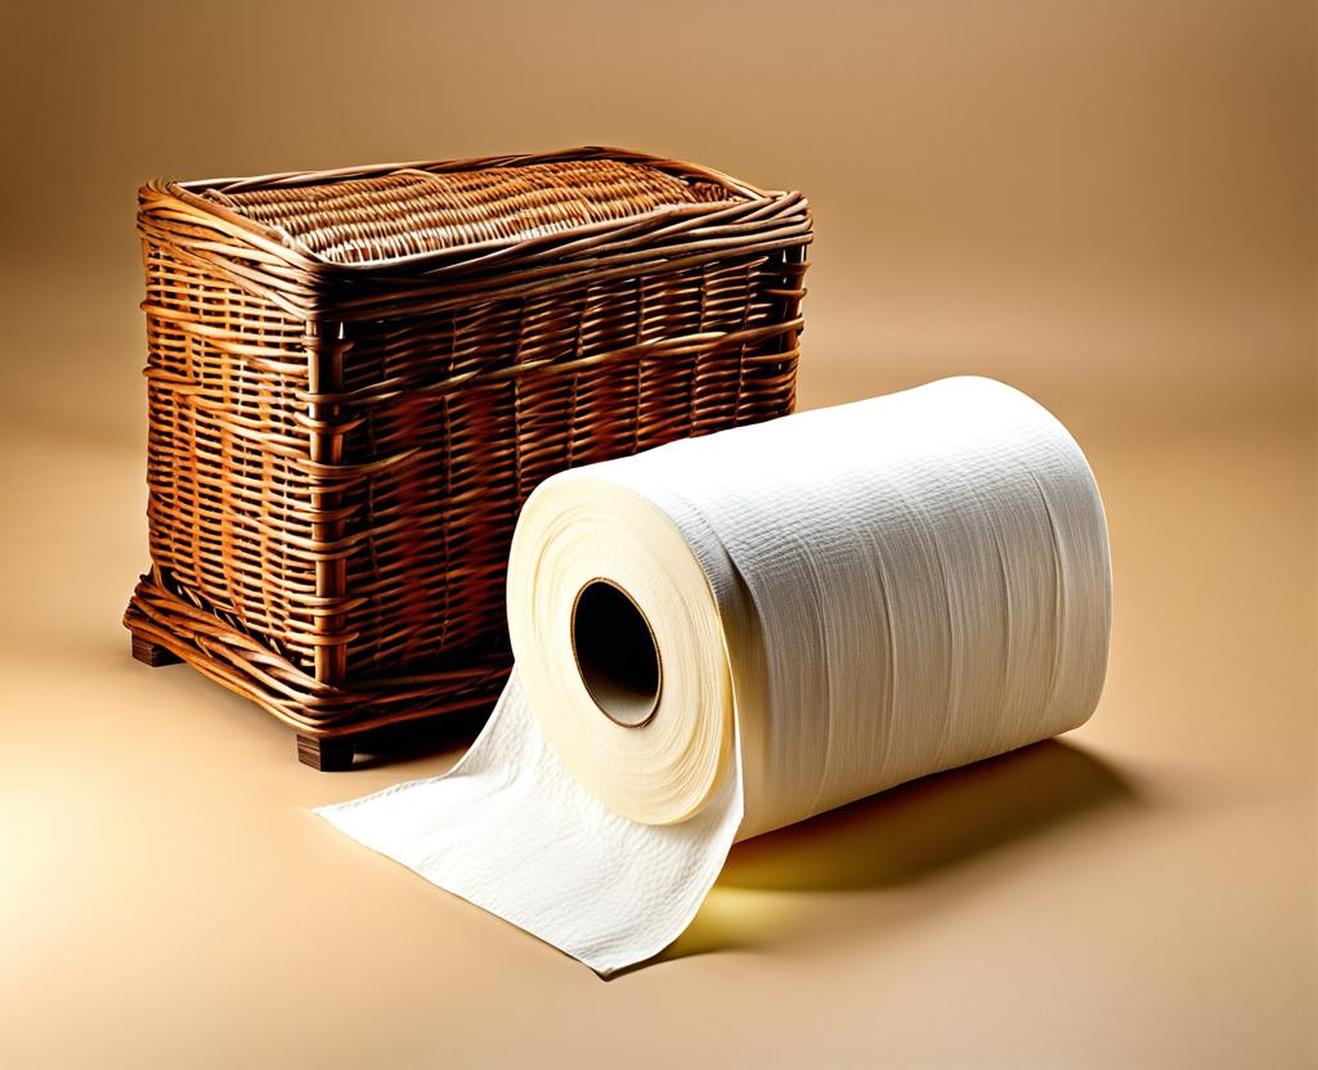 wicker basket toilet paper holder